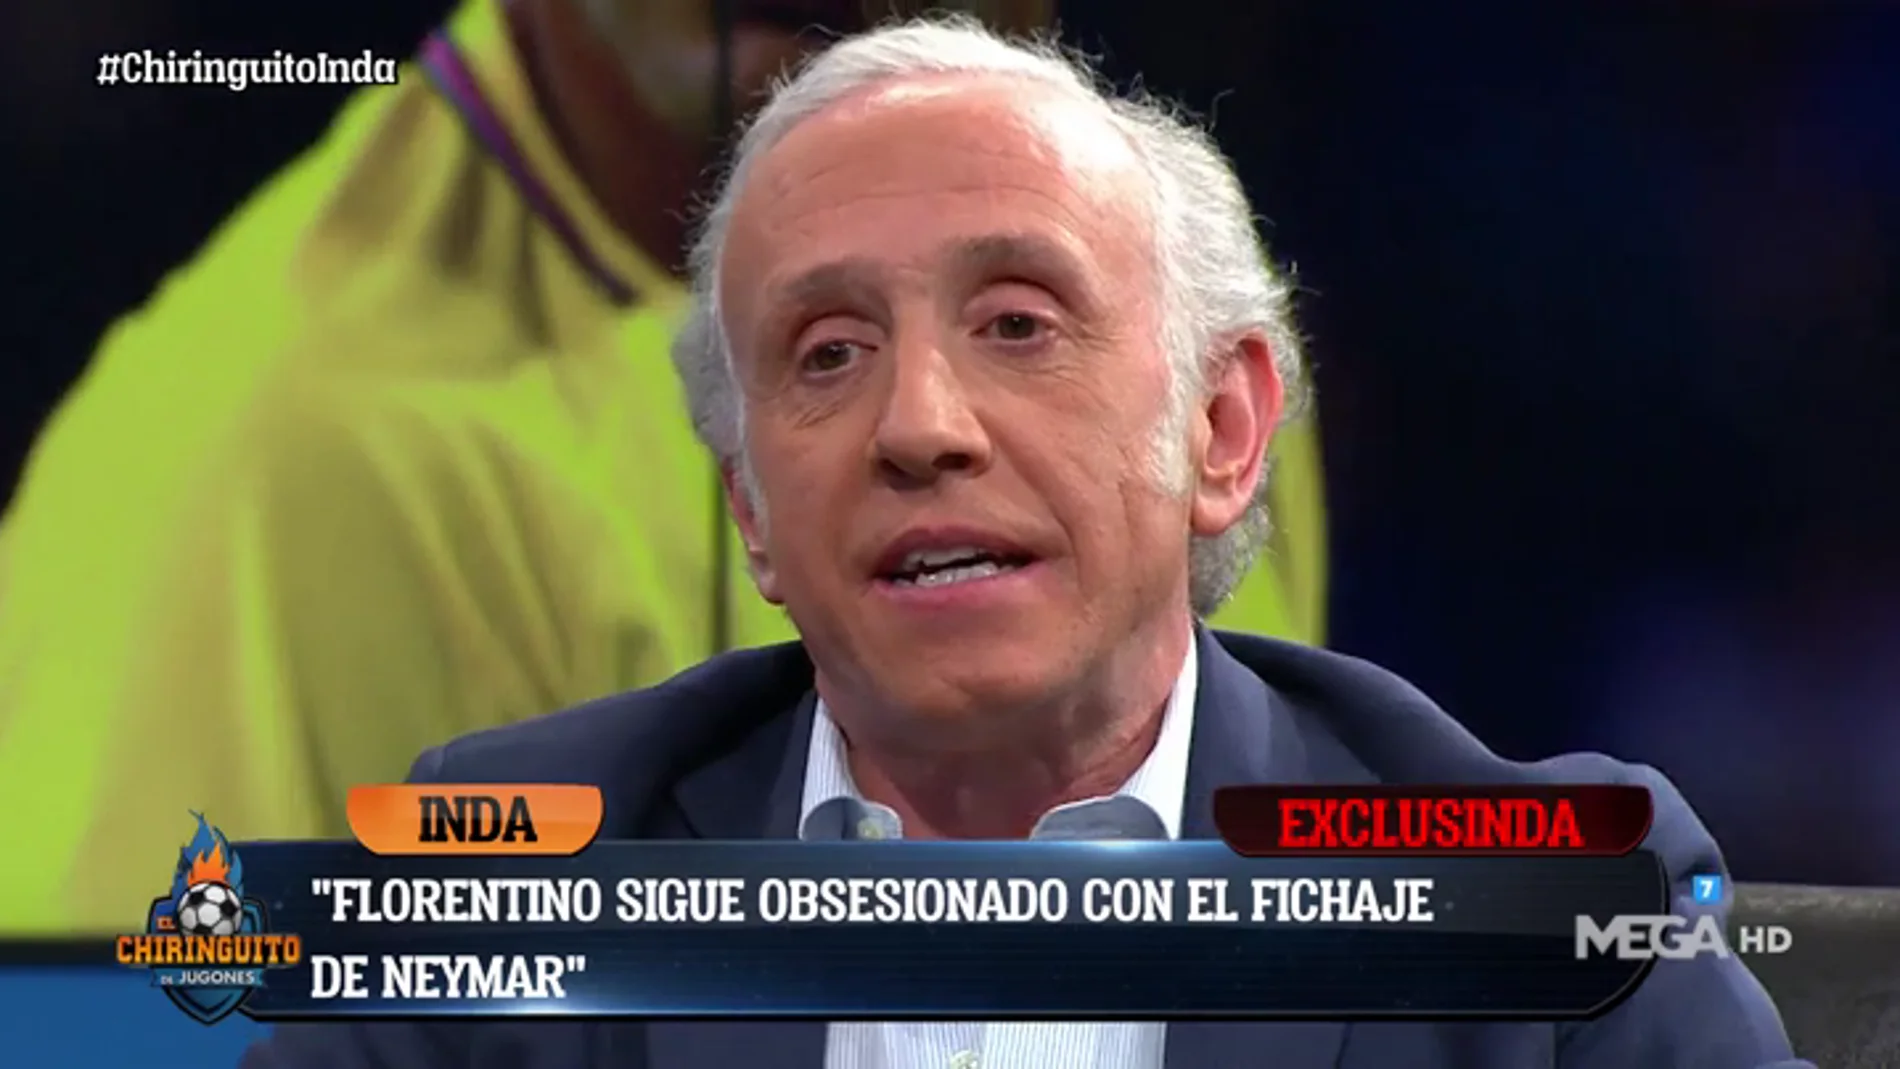 Eduardo Inda: "Florentino está obsesionado con fichar a Neymar y Hazard"